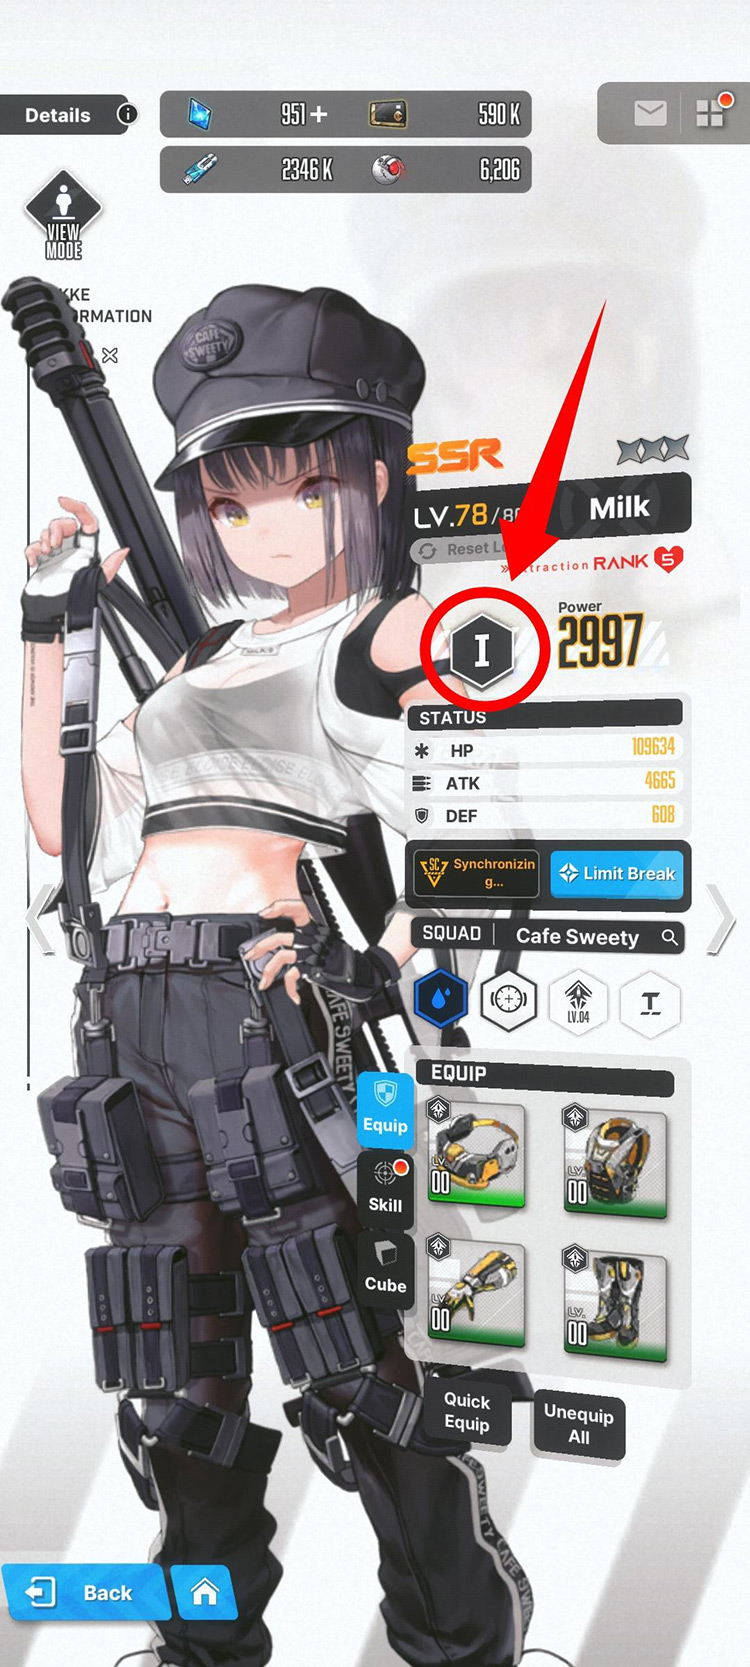 Milk's Character Profile (Milk's Burst Type Highlighted) / NIKKE: Goddess of Victory